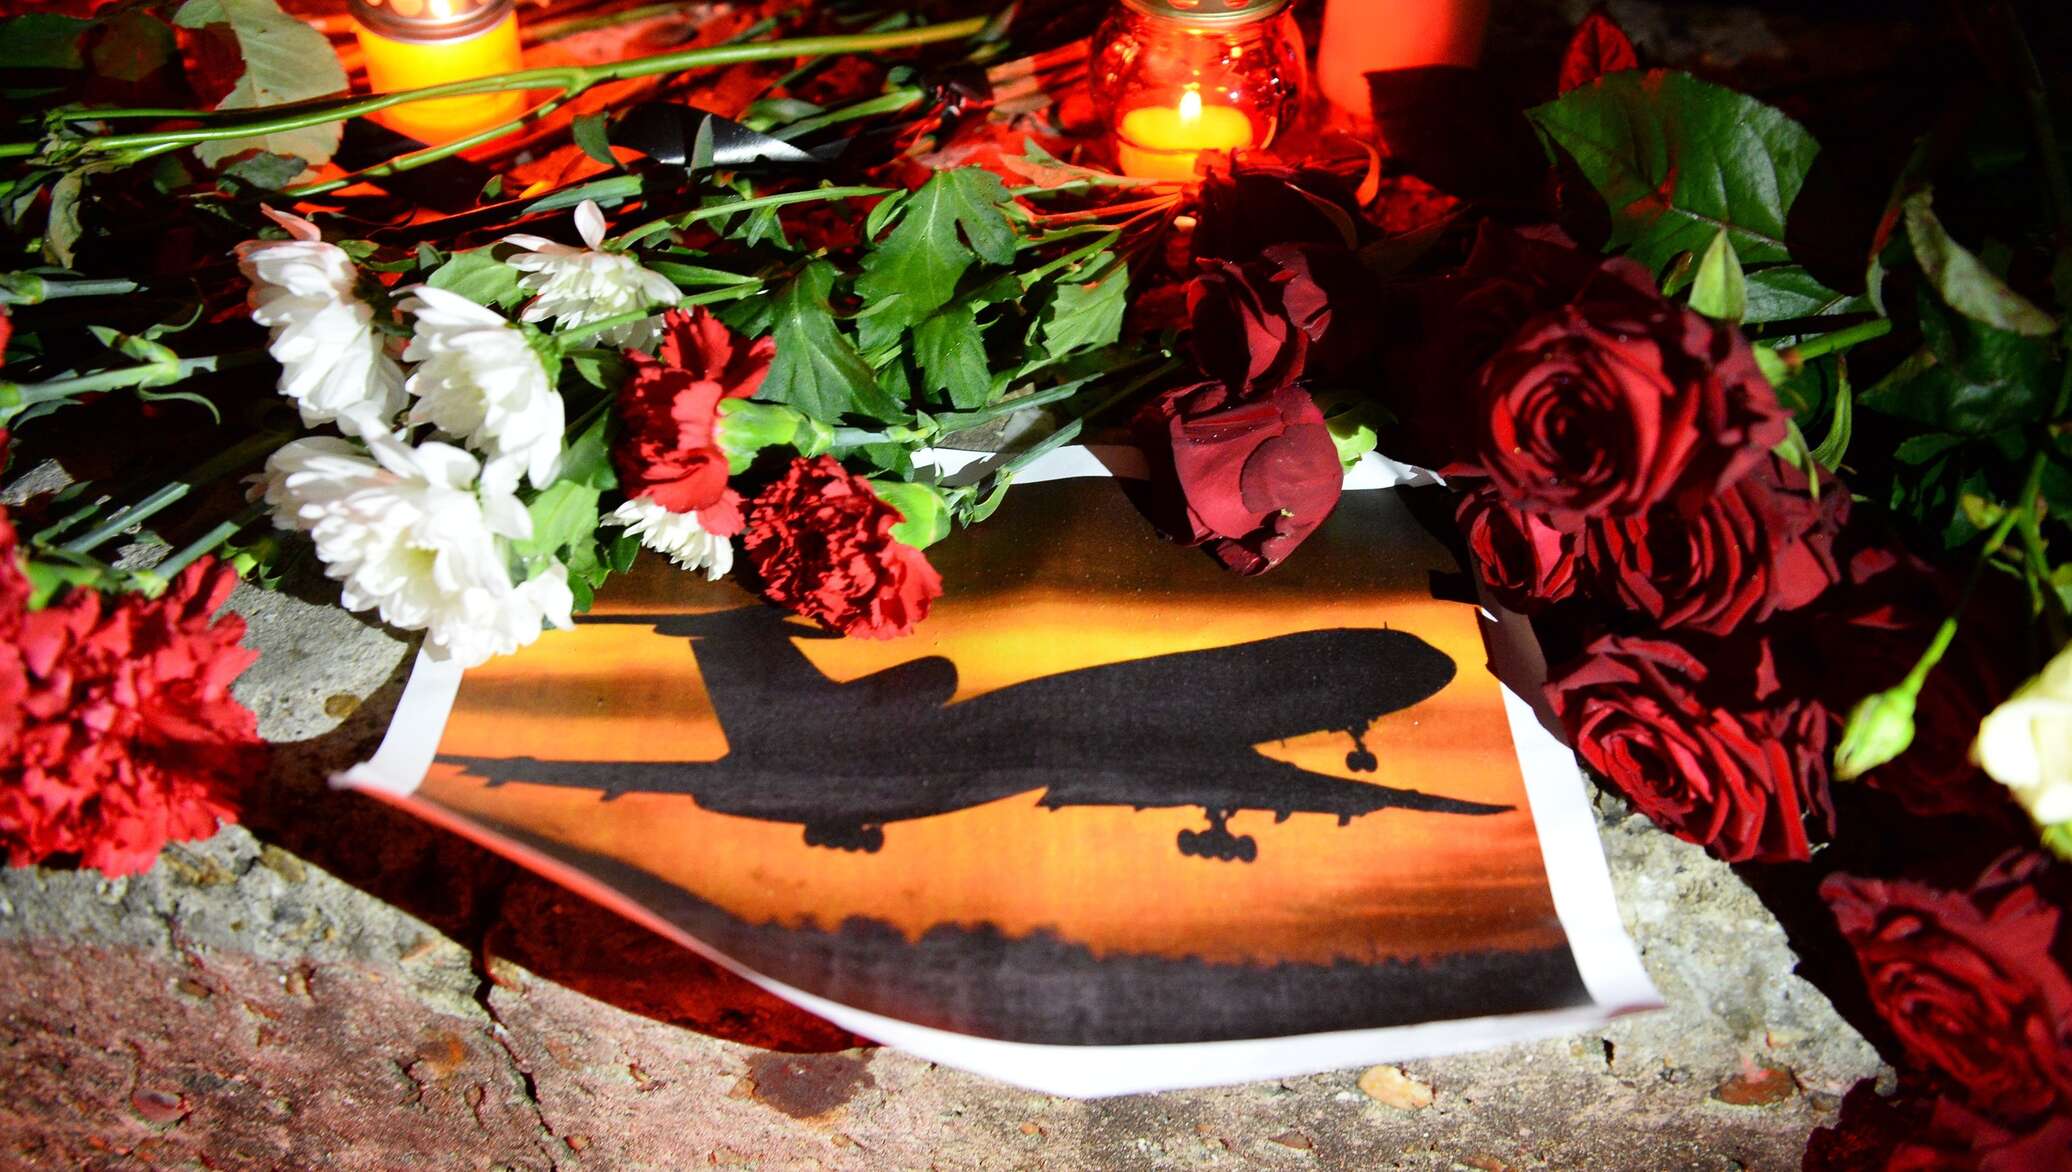 Скорбная музыка. Траурные цветы. Память погибшим. Вечная память летчикам. Свеча памяти погибшим в авиакатастрофе.